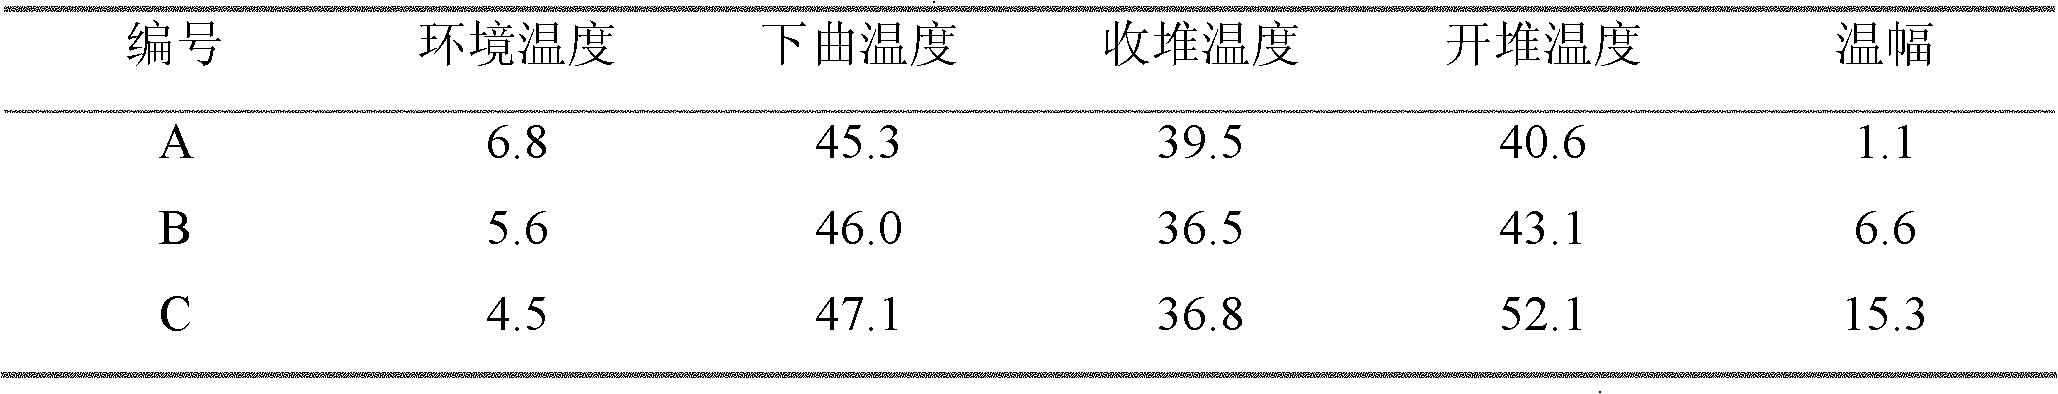 Method for preparing intensified daqu applied to nongjiang-flavor Chinese spirits